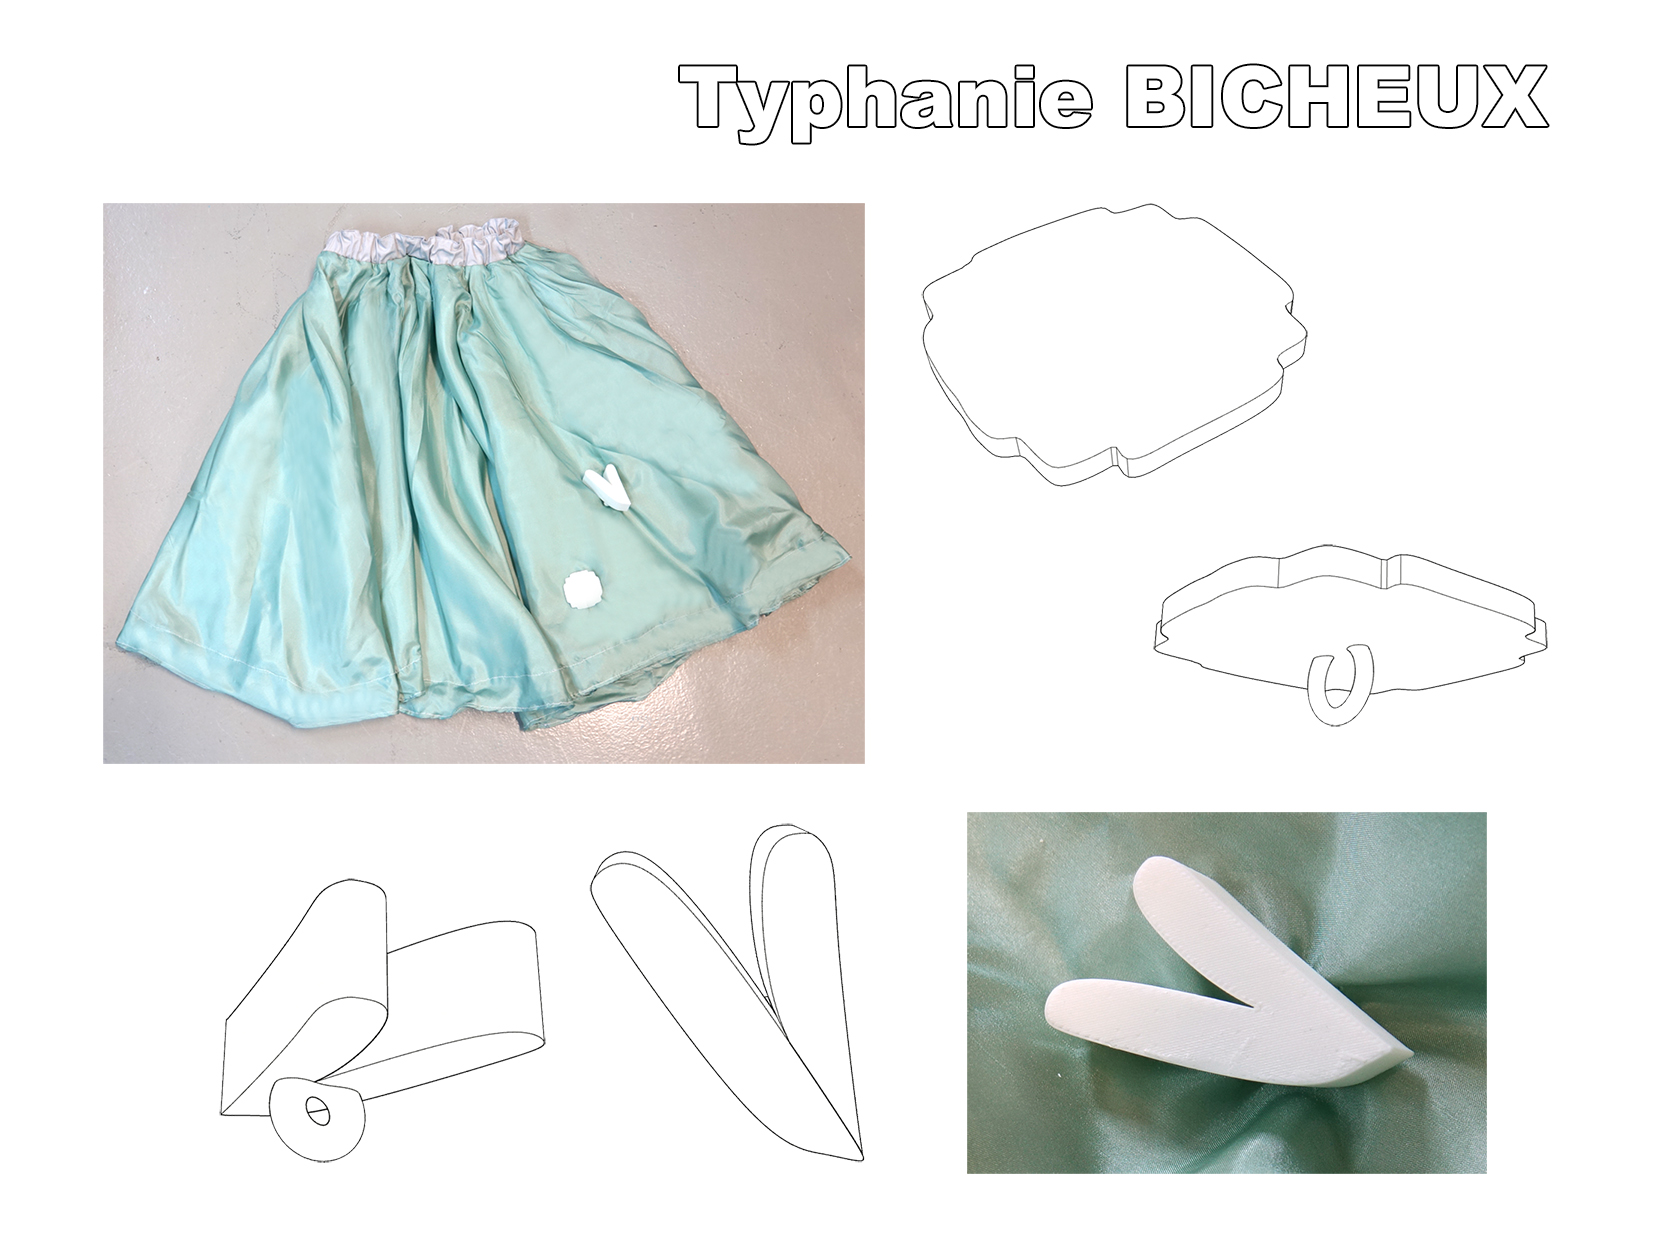 79_Typhanie Bicheux3